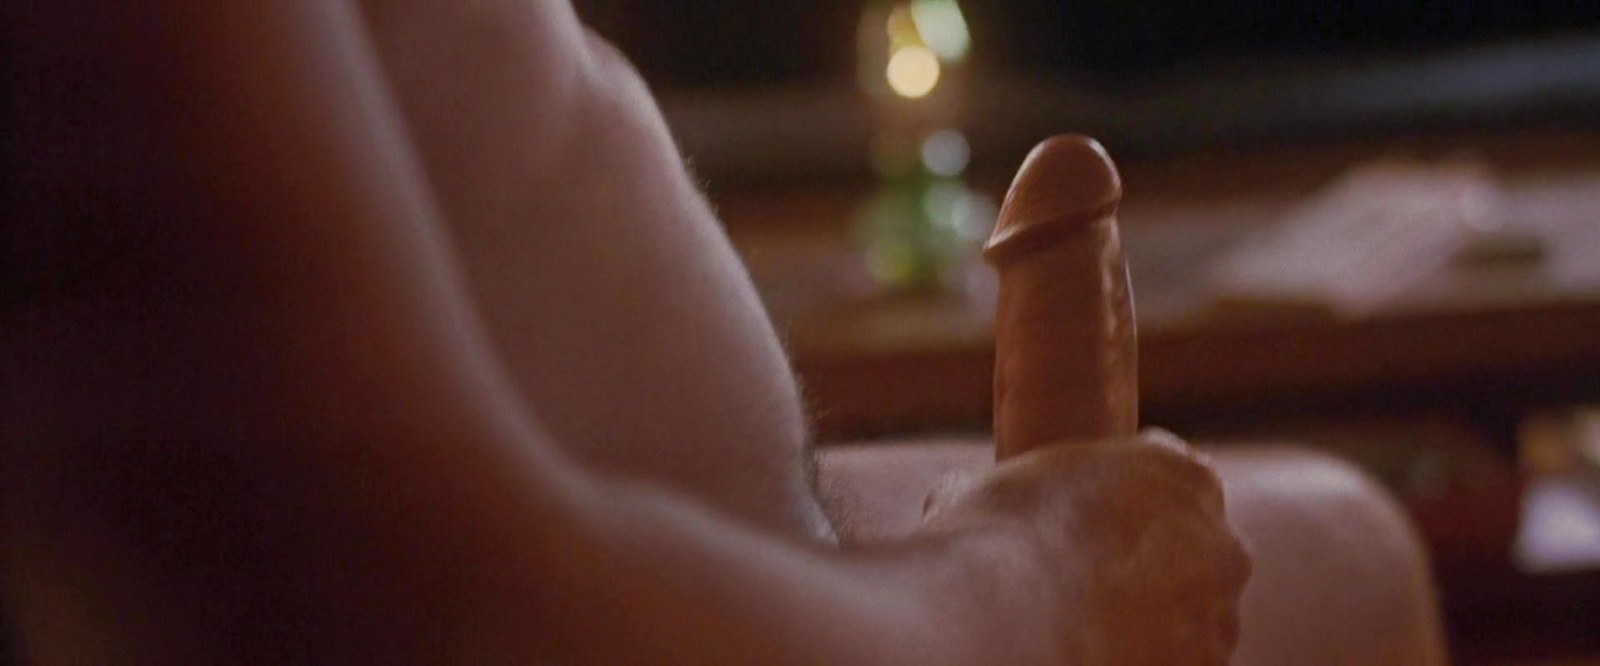 Jesse LaVercombe nudo in "Violation" (2020) .